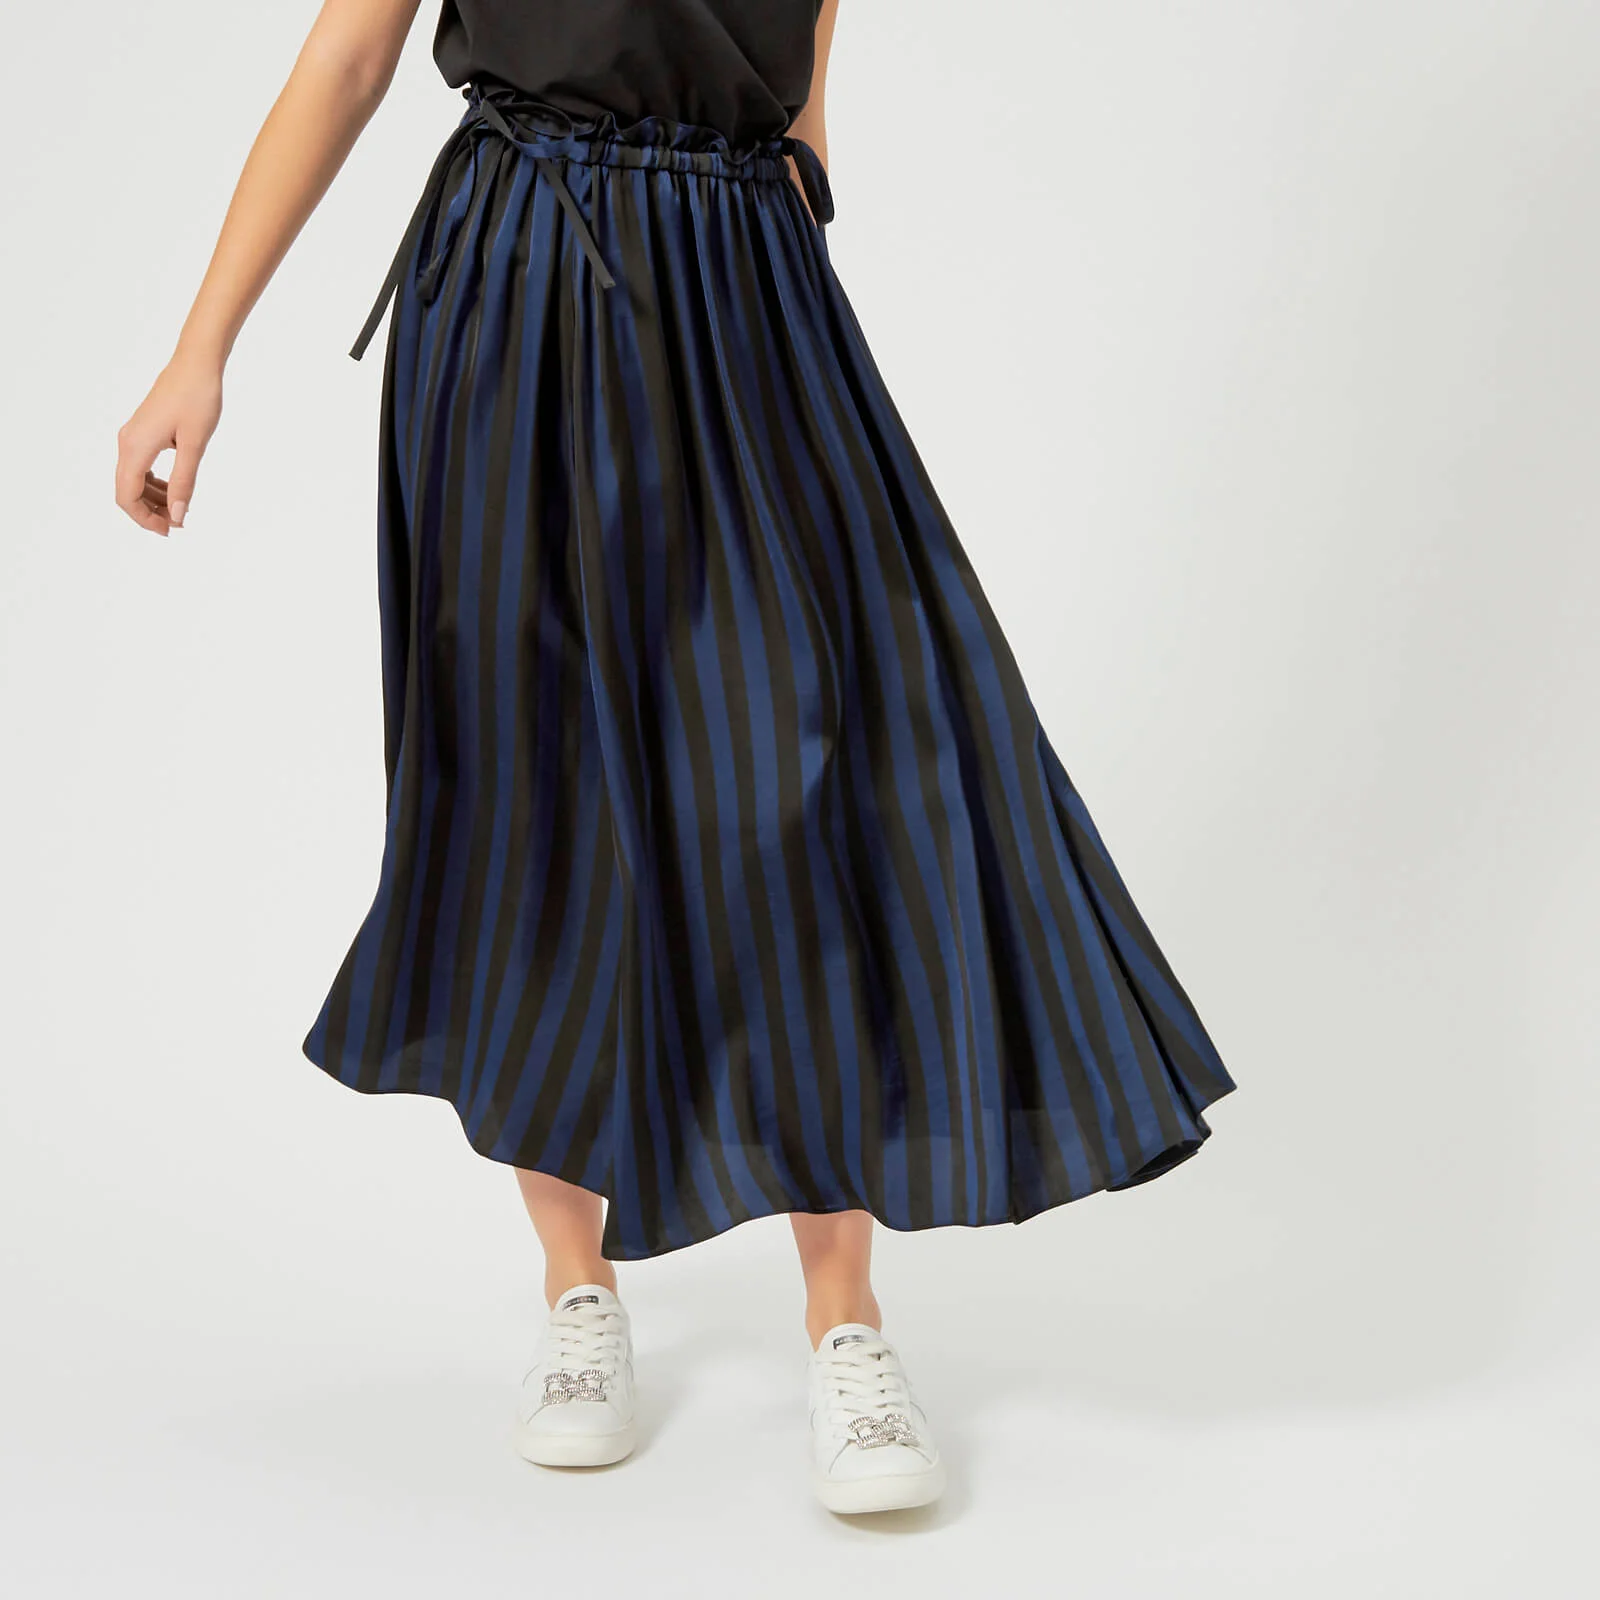 KENZO Women's Medium Stripes Viscose Jacquard Skirt - Black Image 1